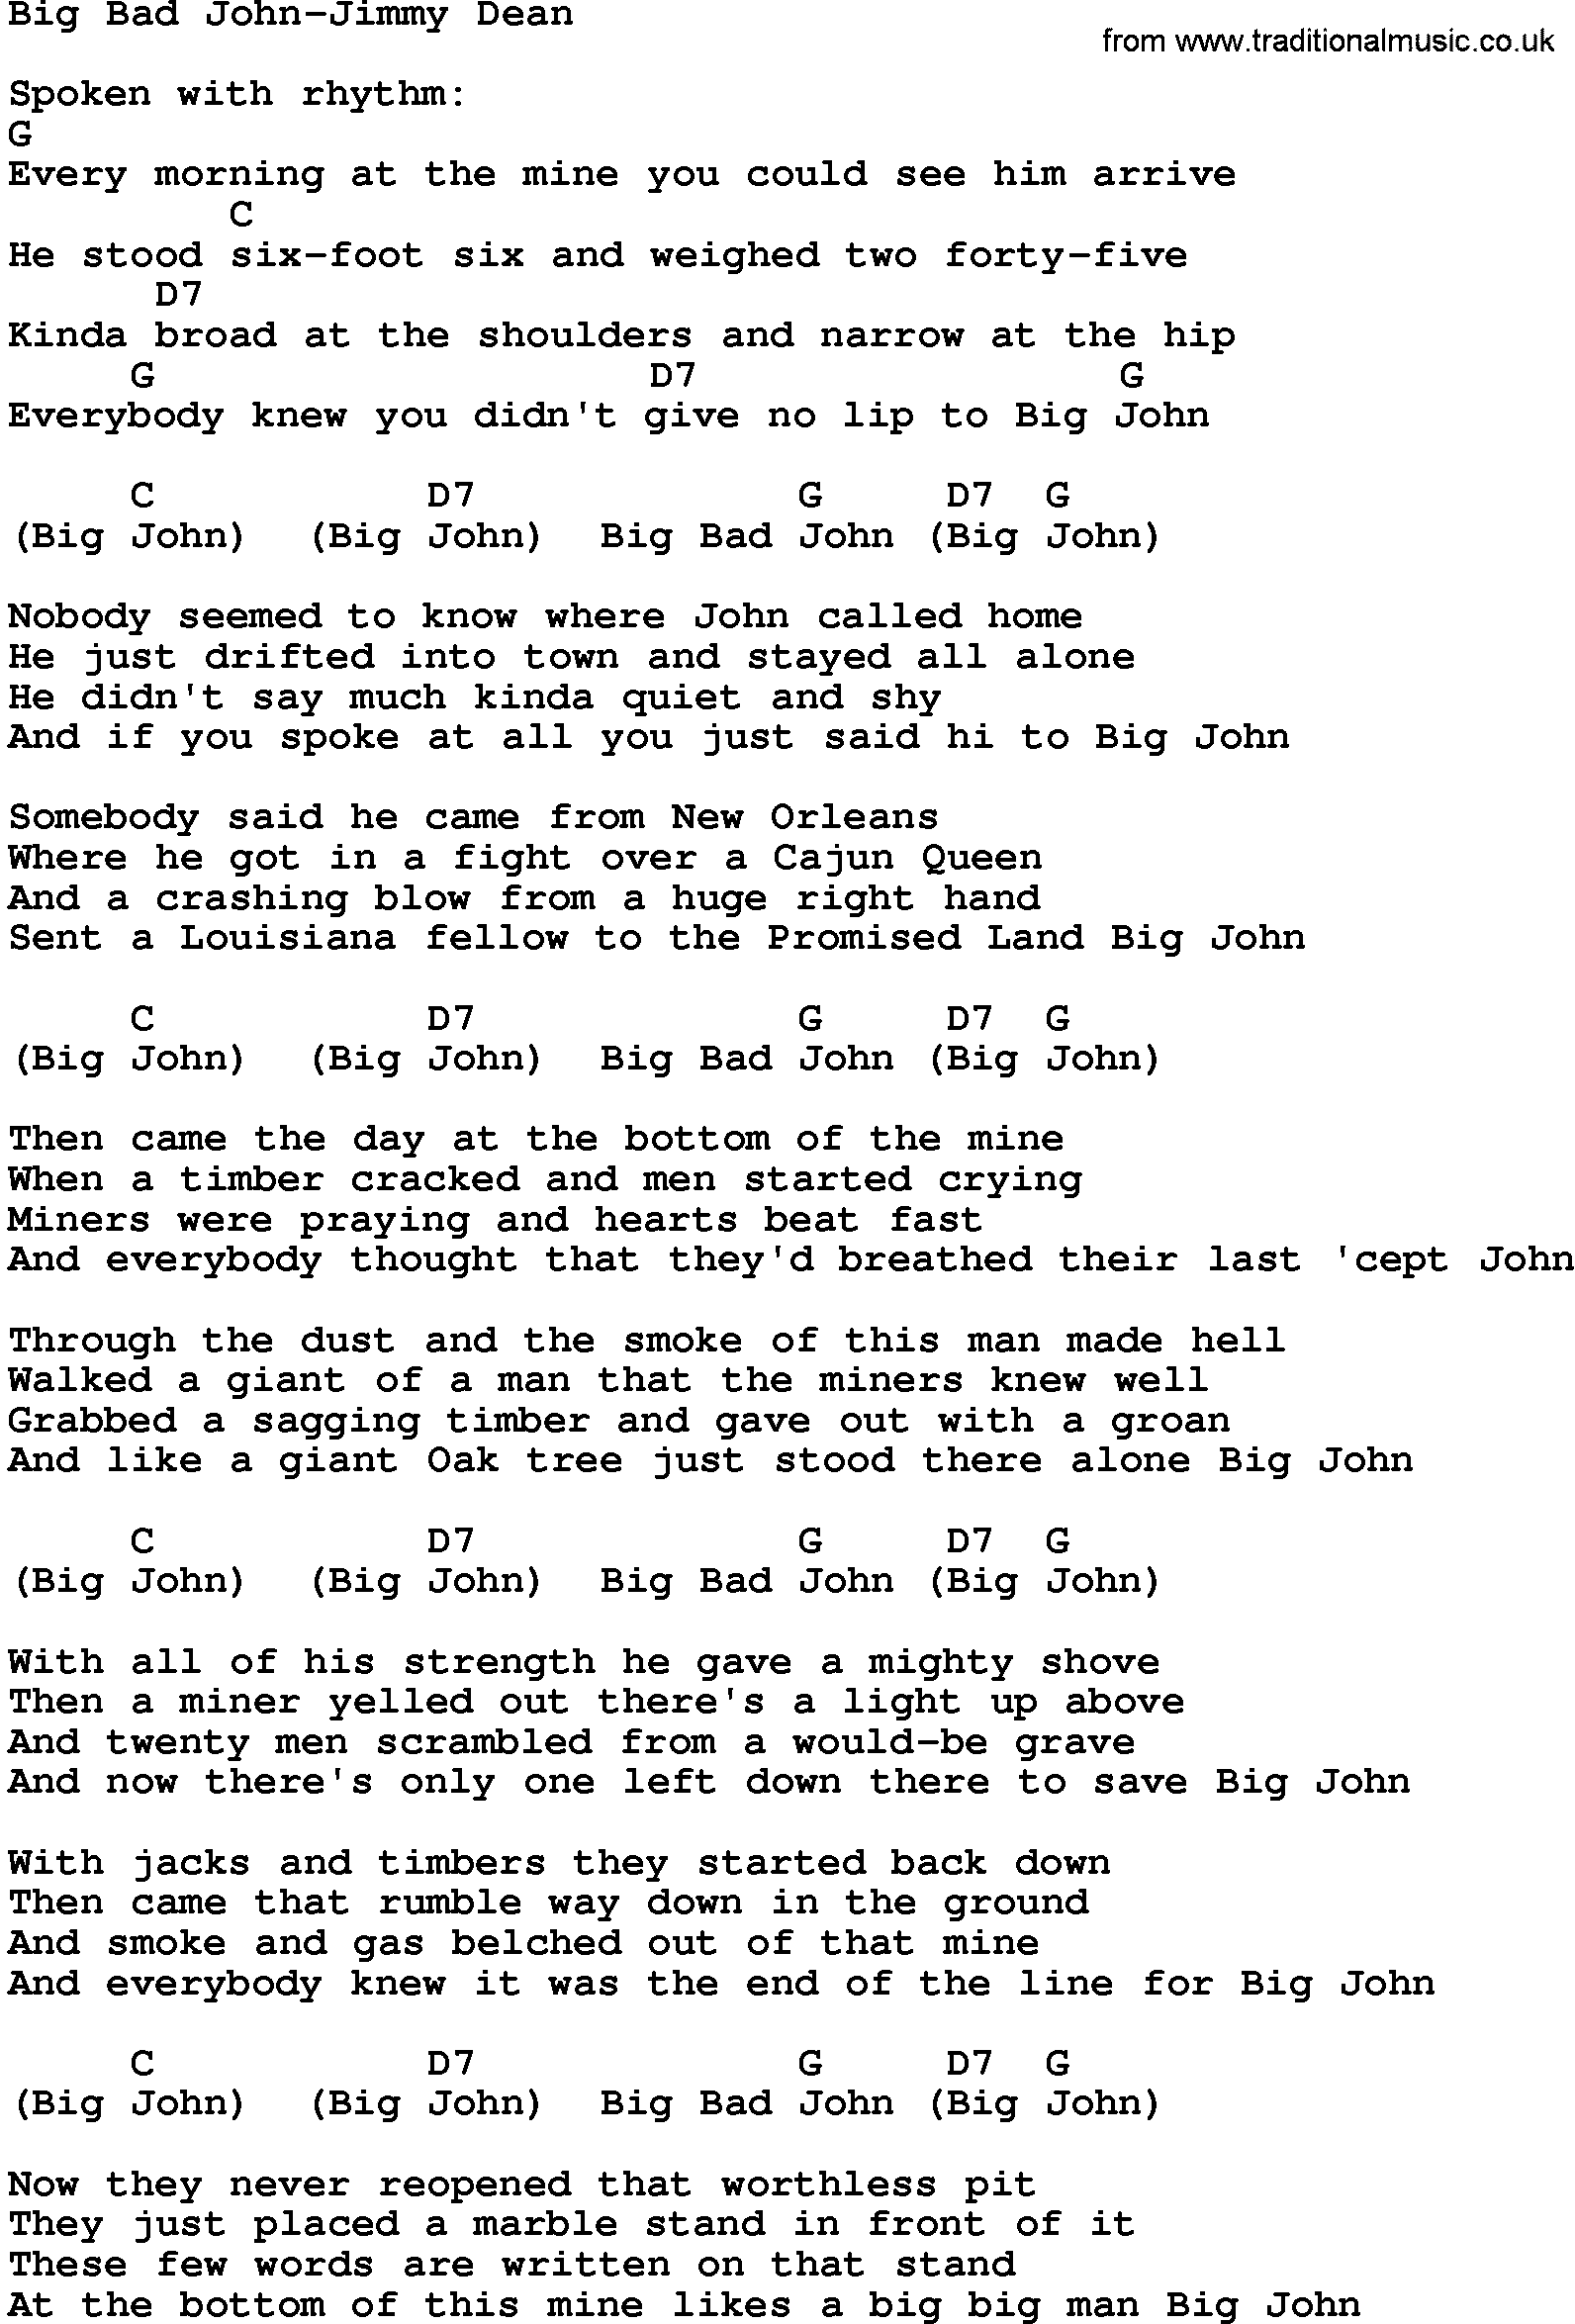 Country music song: Big Bad John-Jimmy Dean lyrics and chords